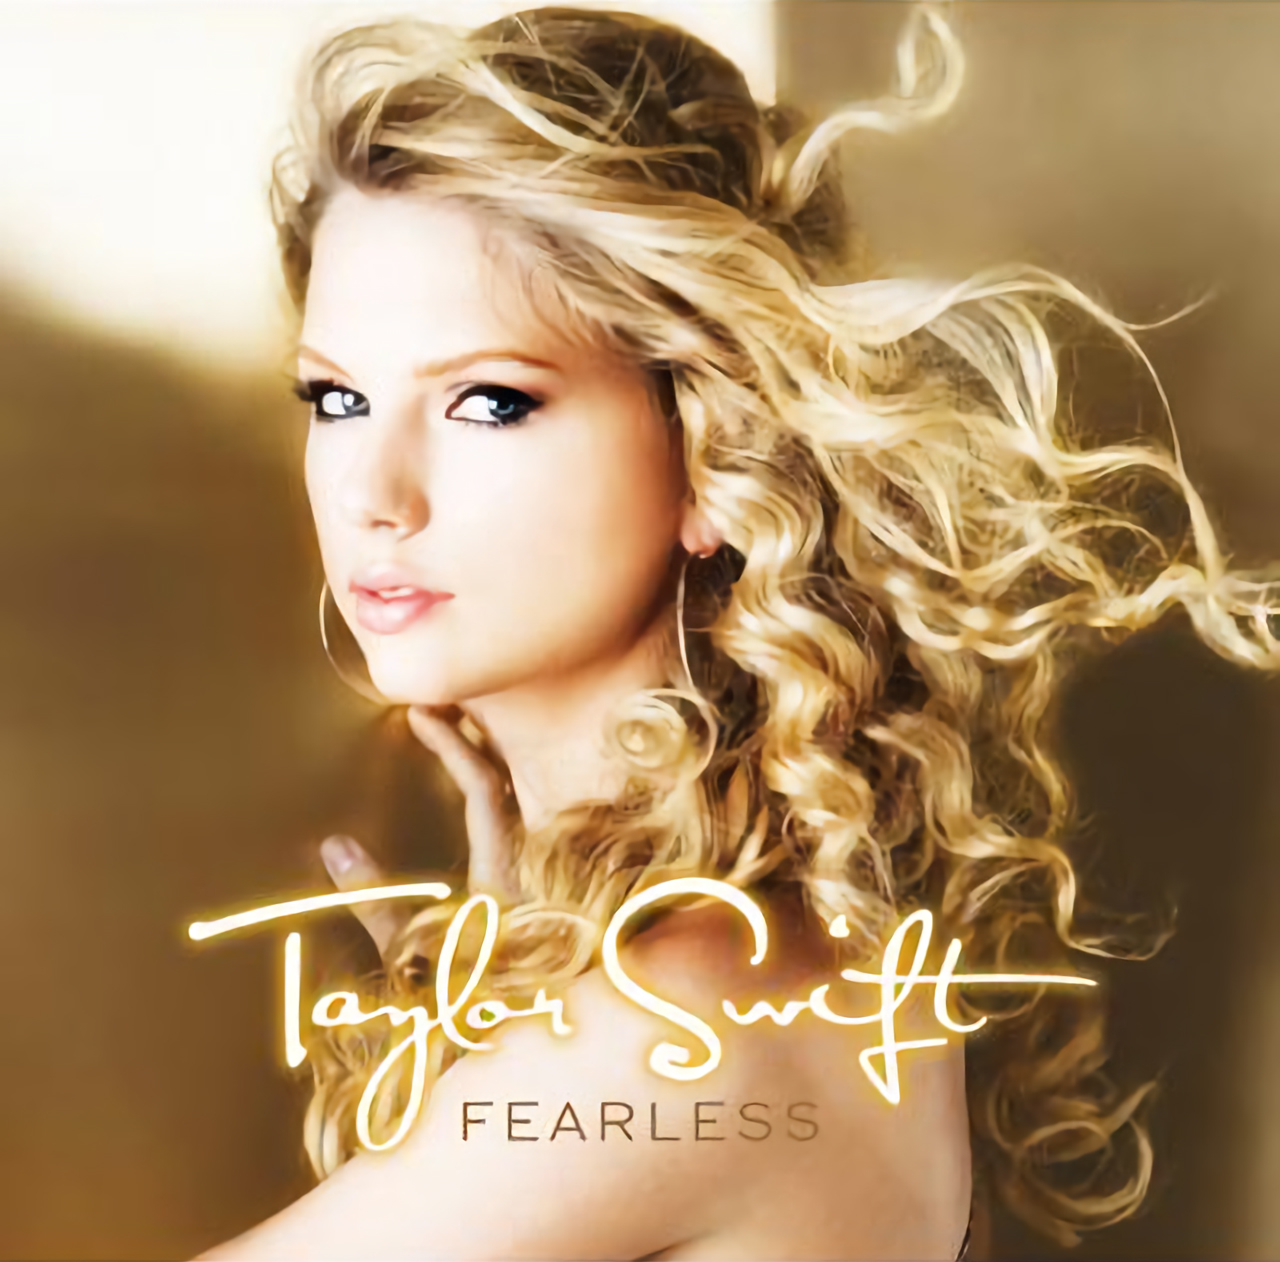 FEARLESS / Taylor Swift